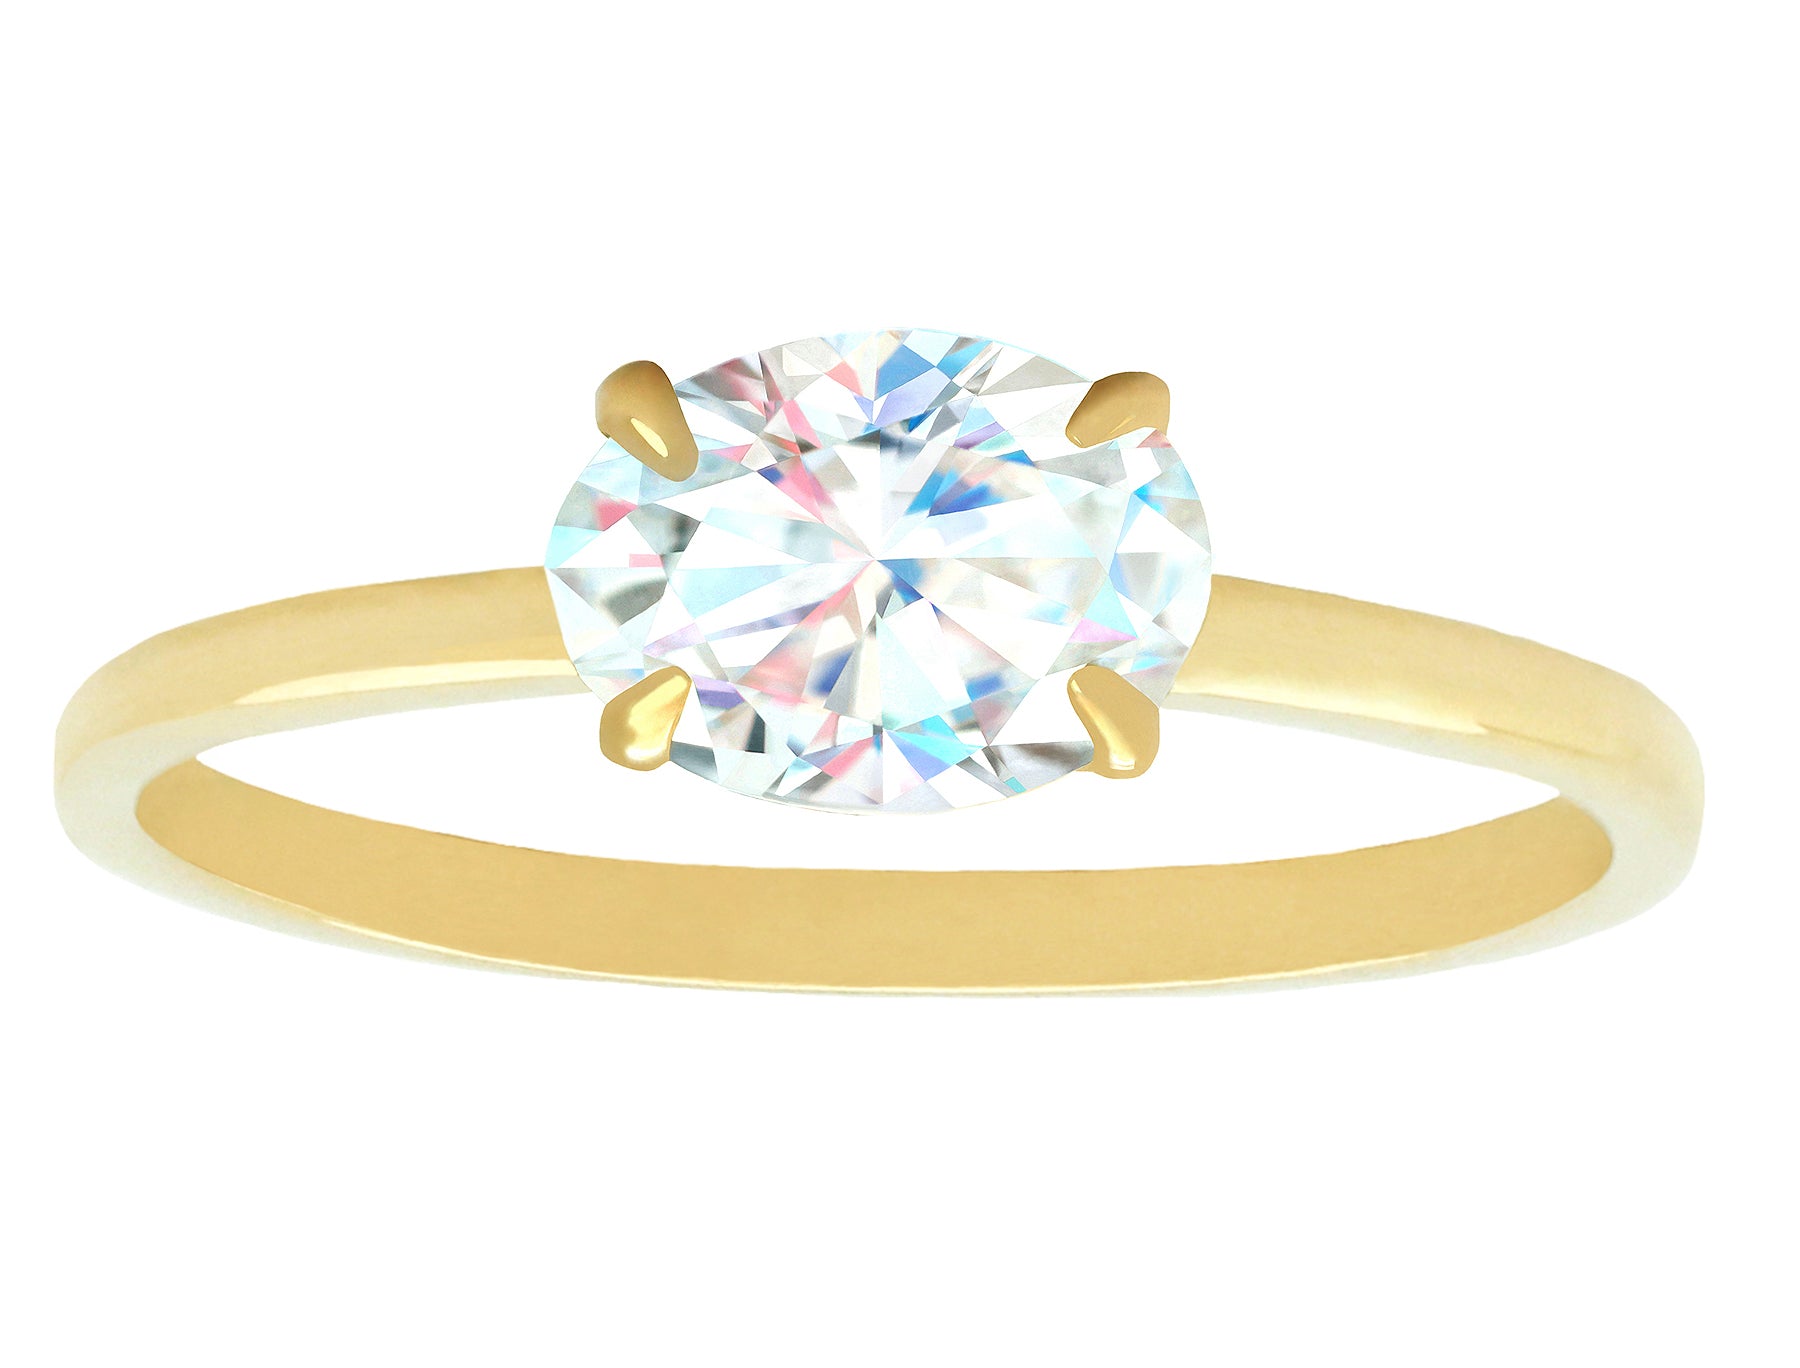 BIG 14K YELLOW GOLD CUSHION CUT SIMULATED DIAMOND ENGAGEMENT RING BRIDAL  4.00CT | eBay